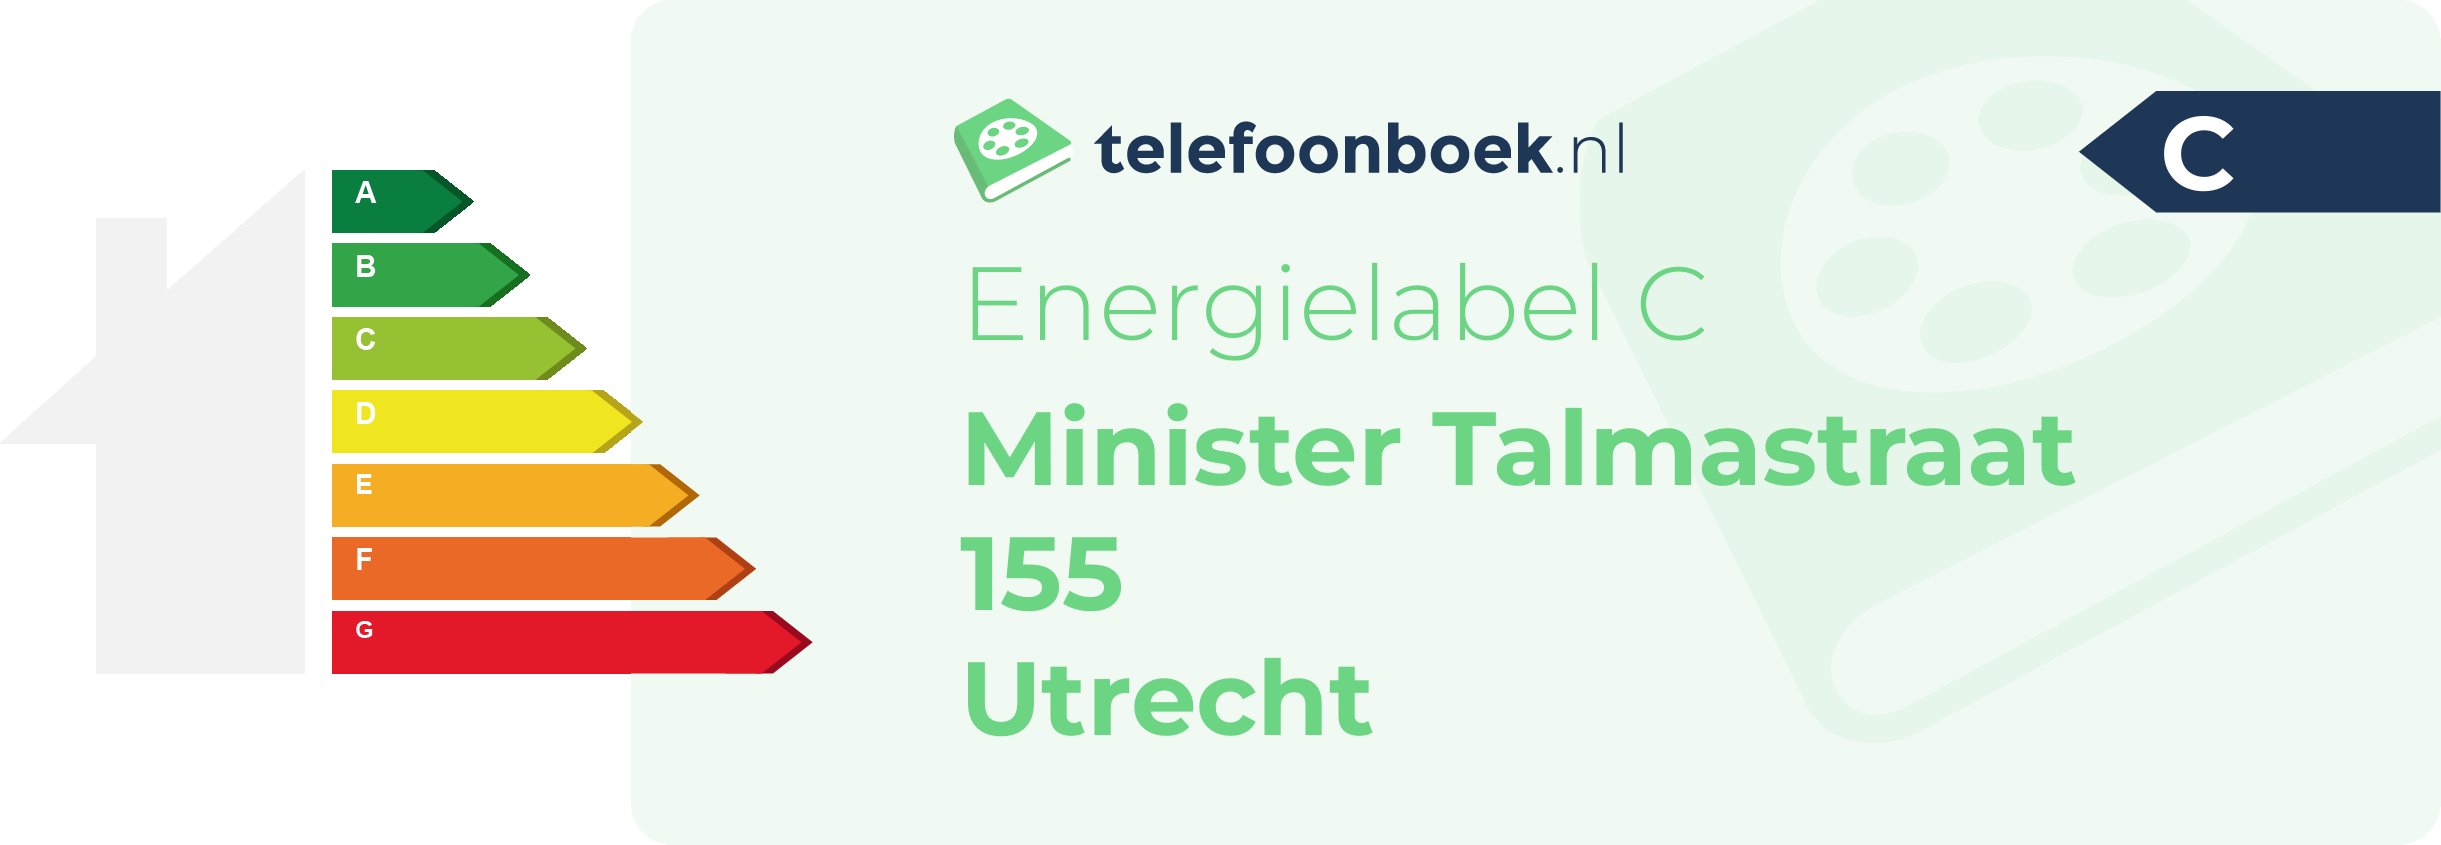 Energielabel Minister Talmastraat 155 Utrecht